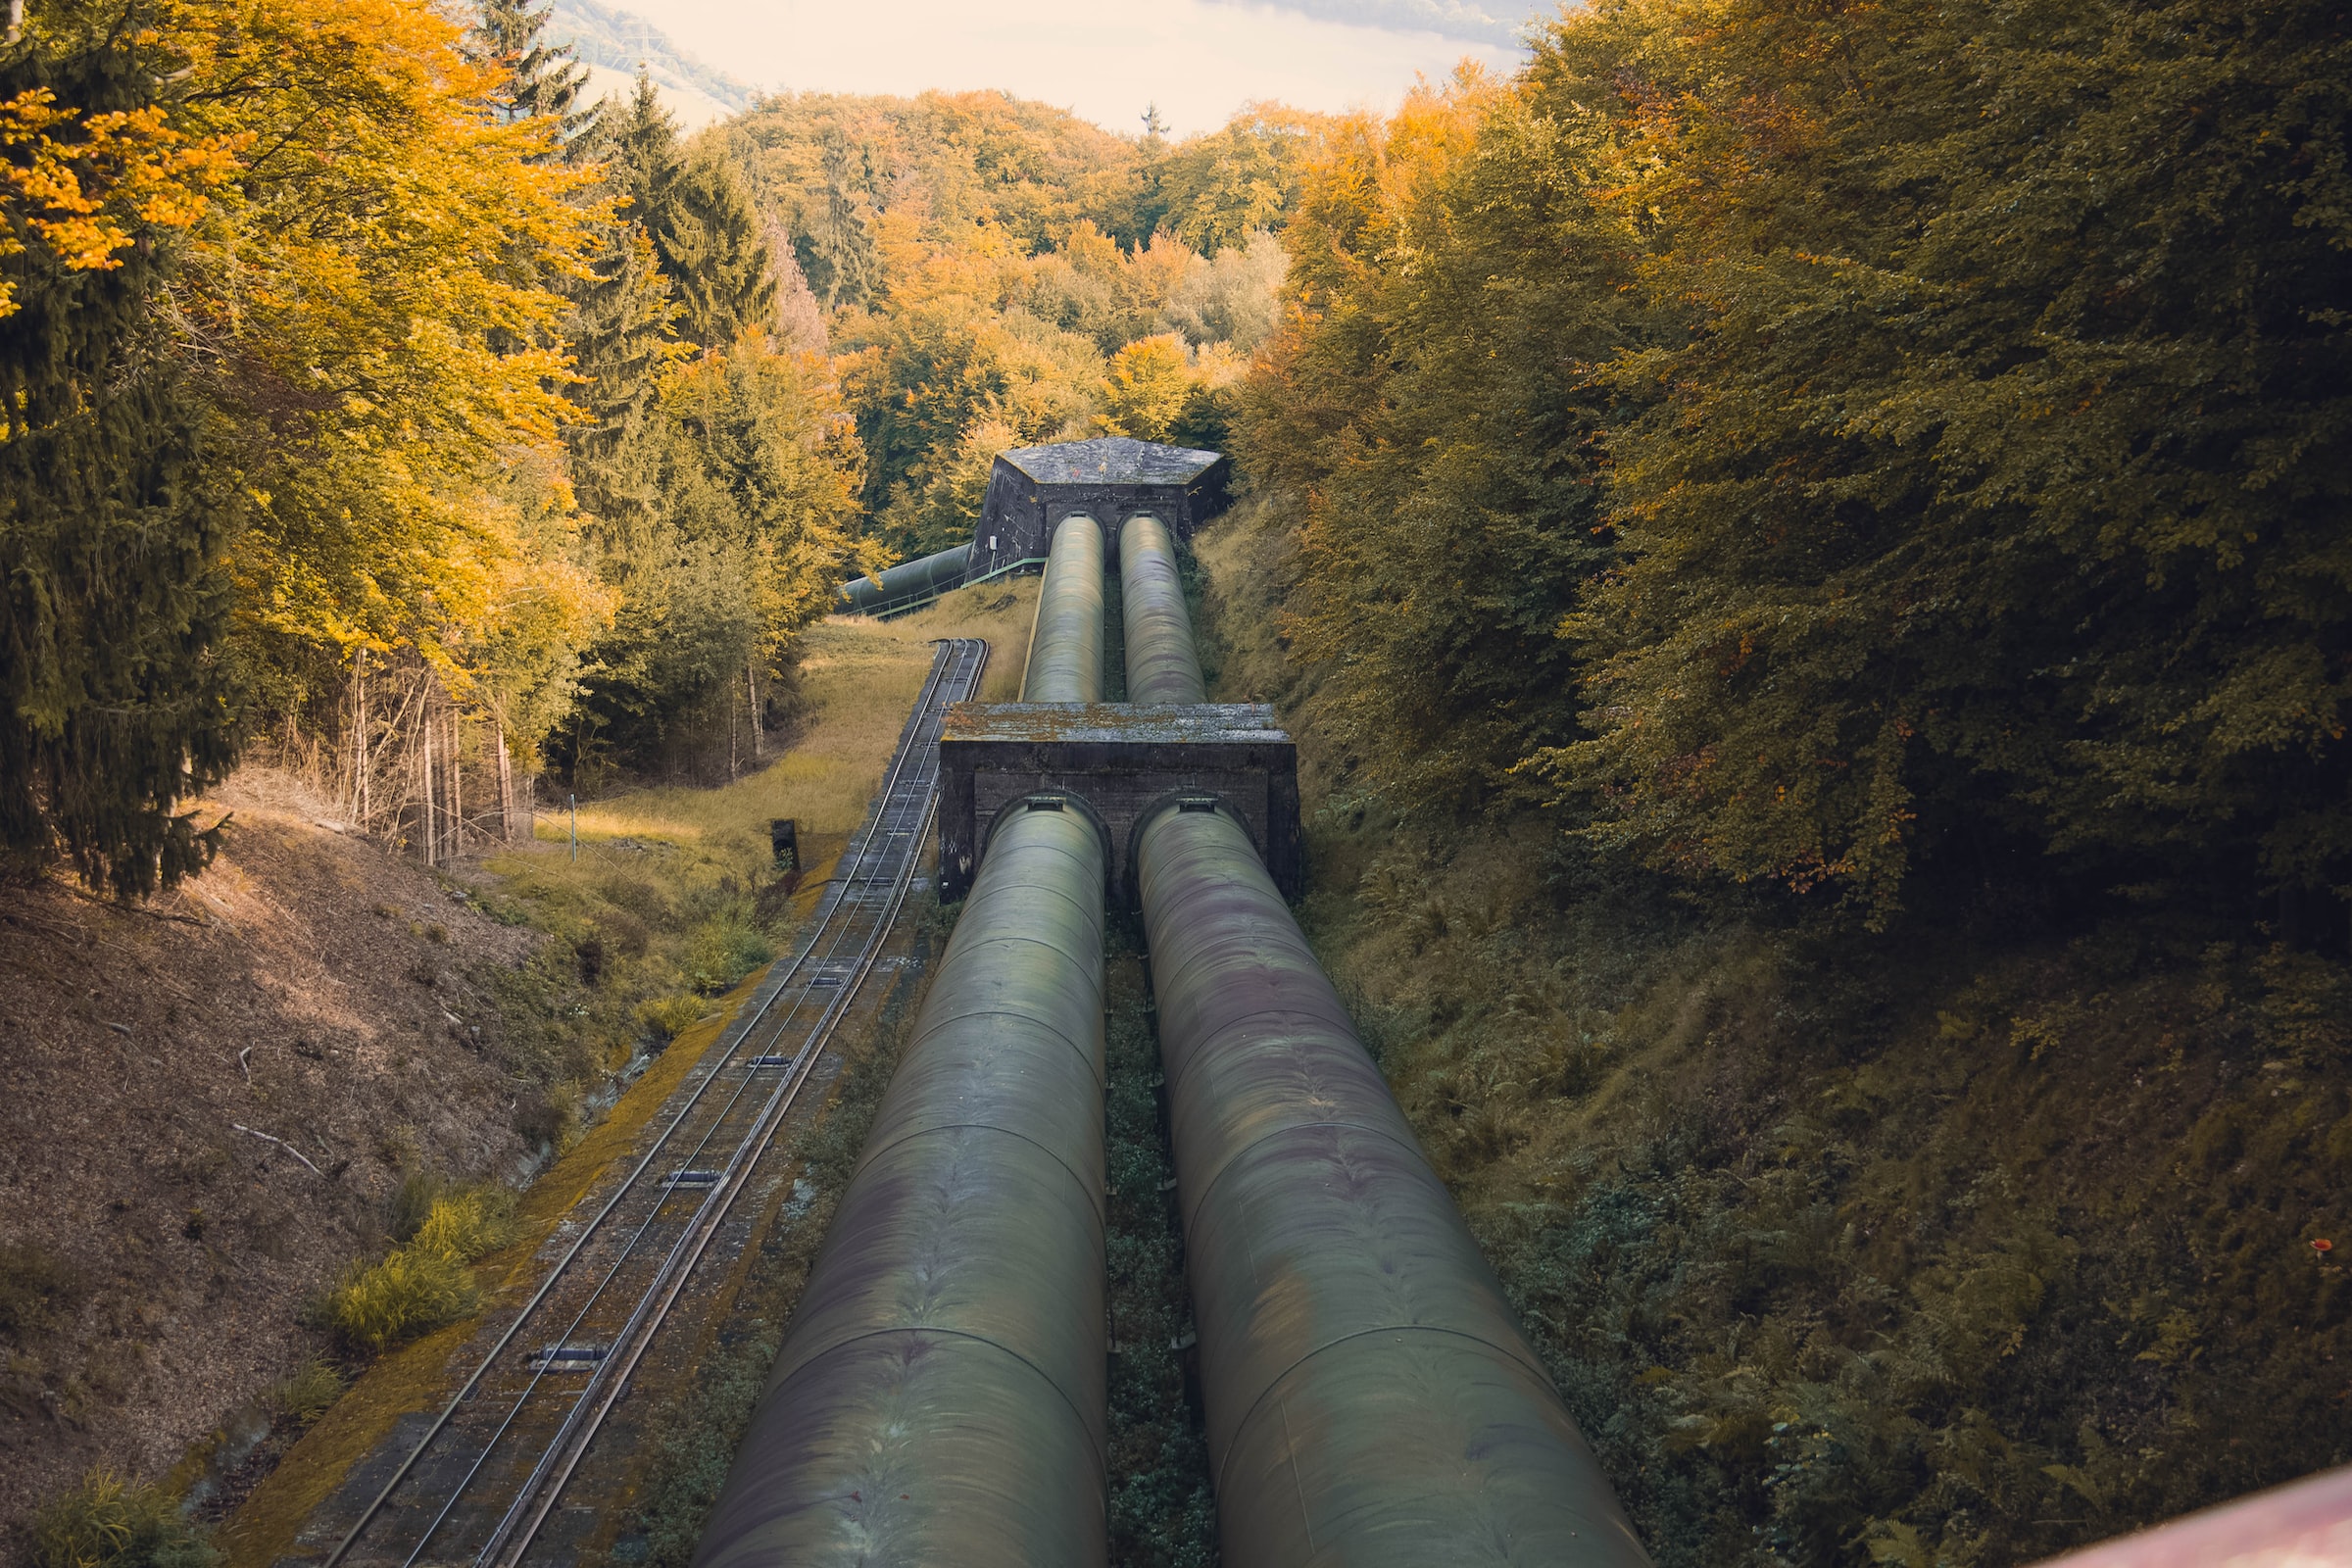 A pipeline cuts through dense forest